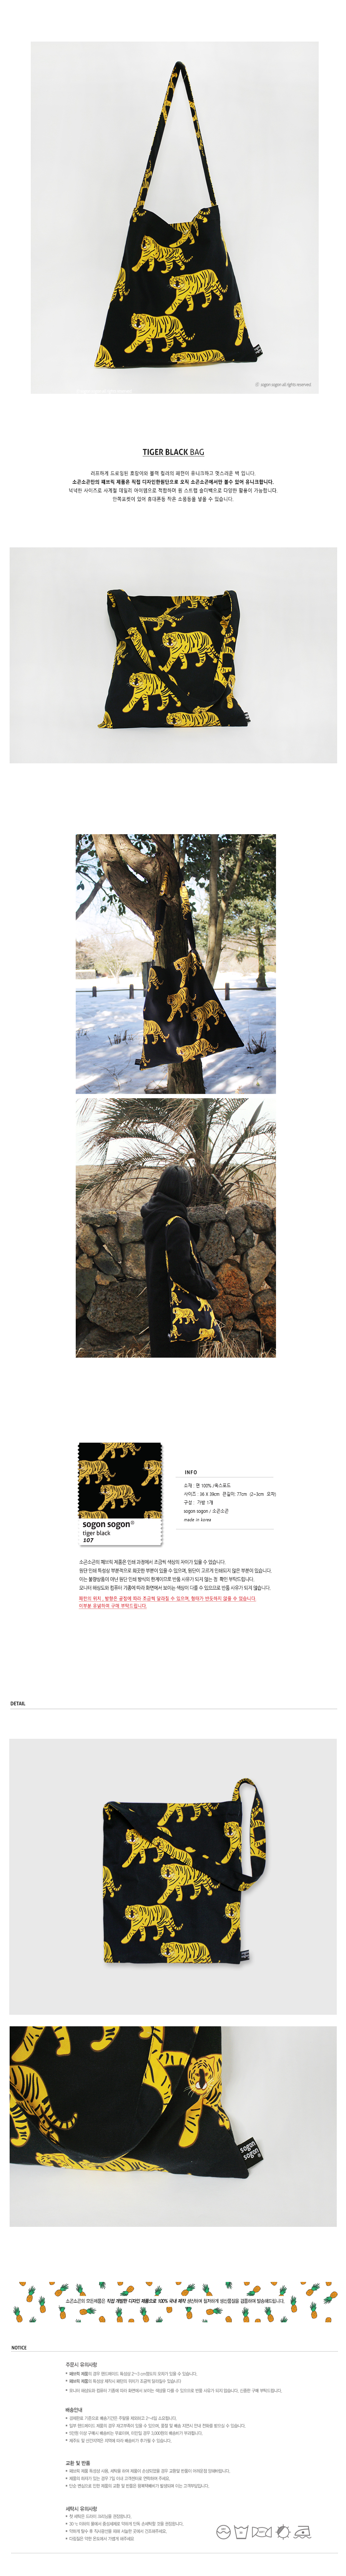 Tiger black bag 28,000원 - 소곤소곤 패션잡화, 가방, 에코백, 패턴 바보사랑 Tiger black bag 28,000원 - 소곤소곤 패션잡화, 가방, 에코백, 패턴 바보사랑